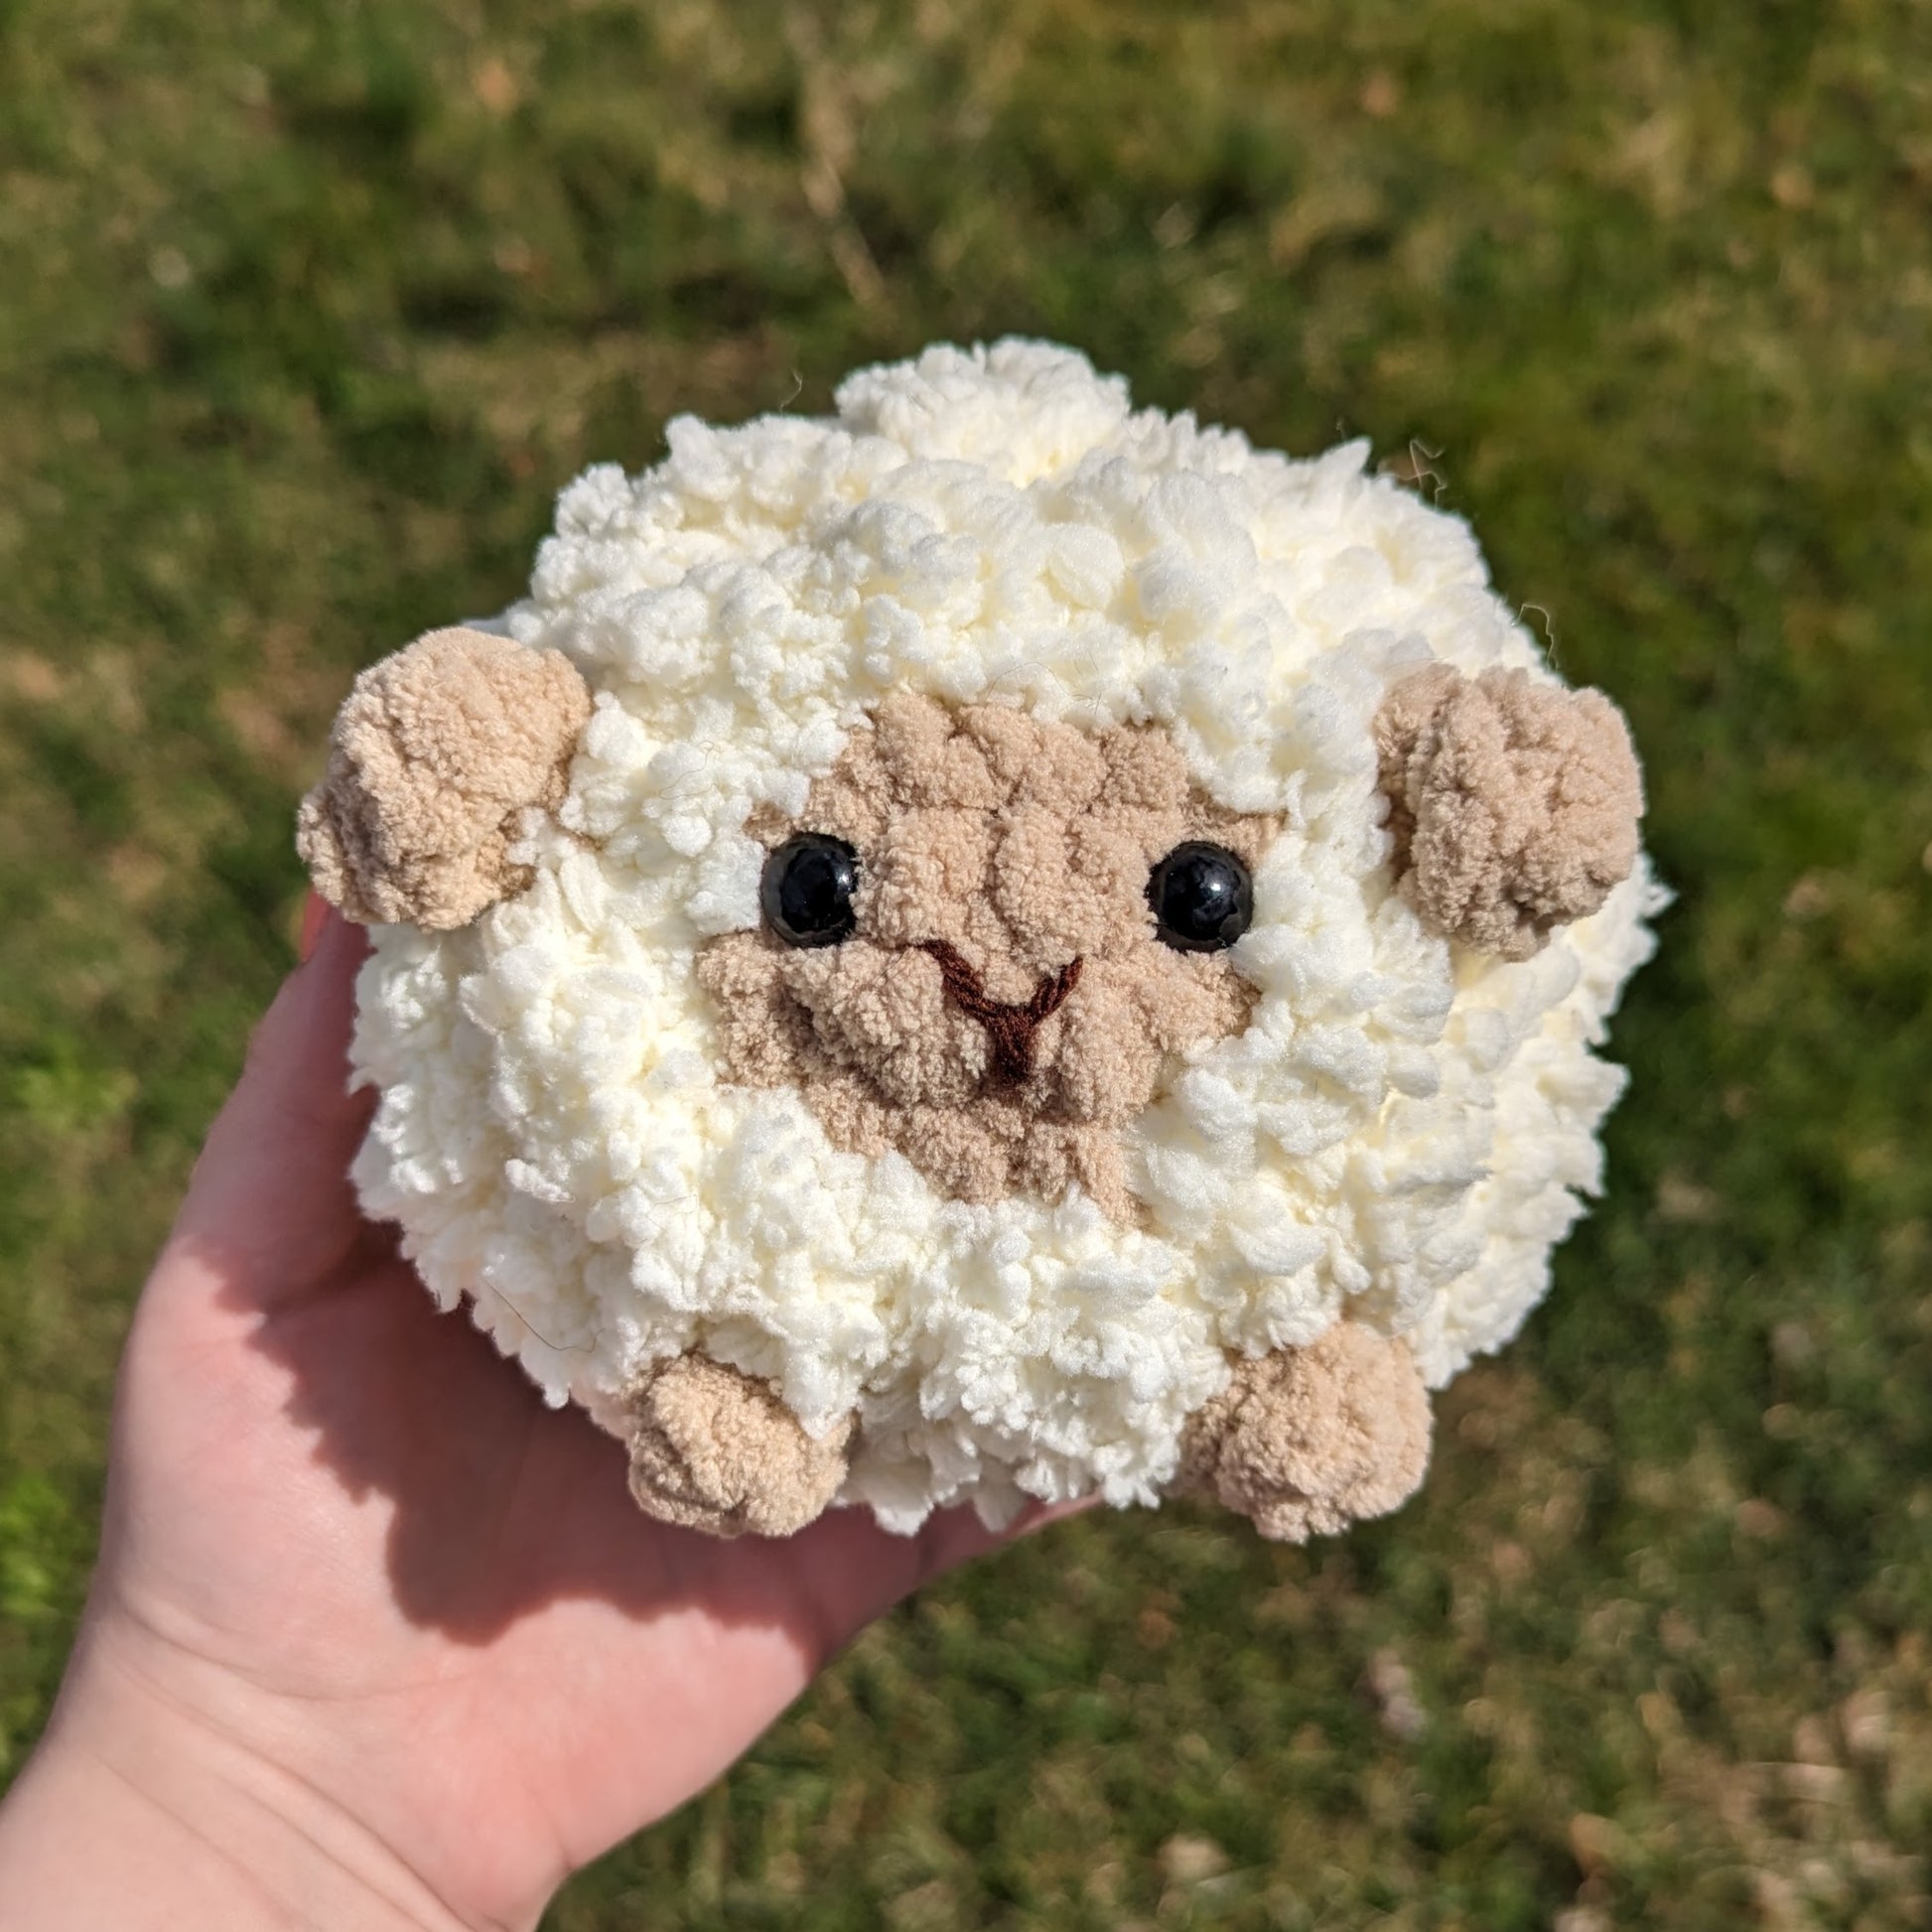 little sheep plushy keychain, amigurumi